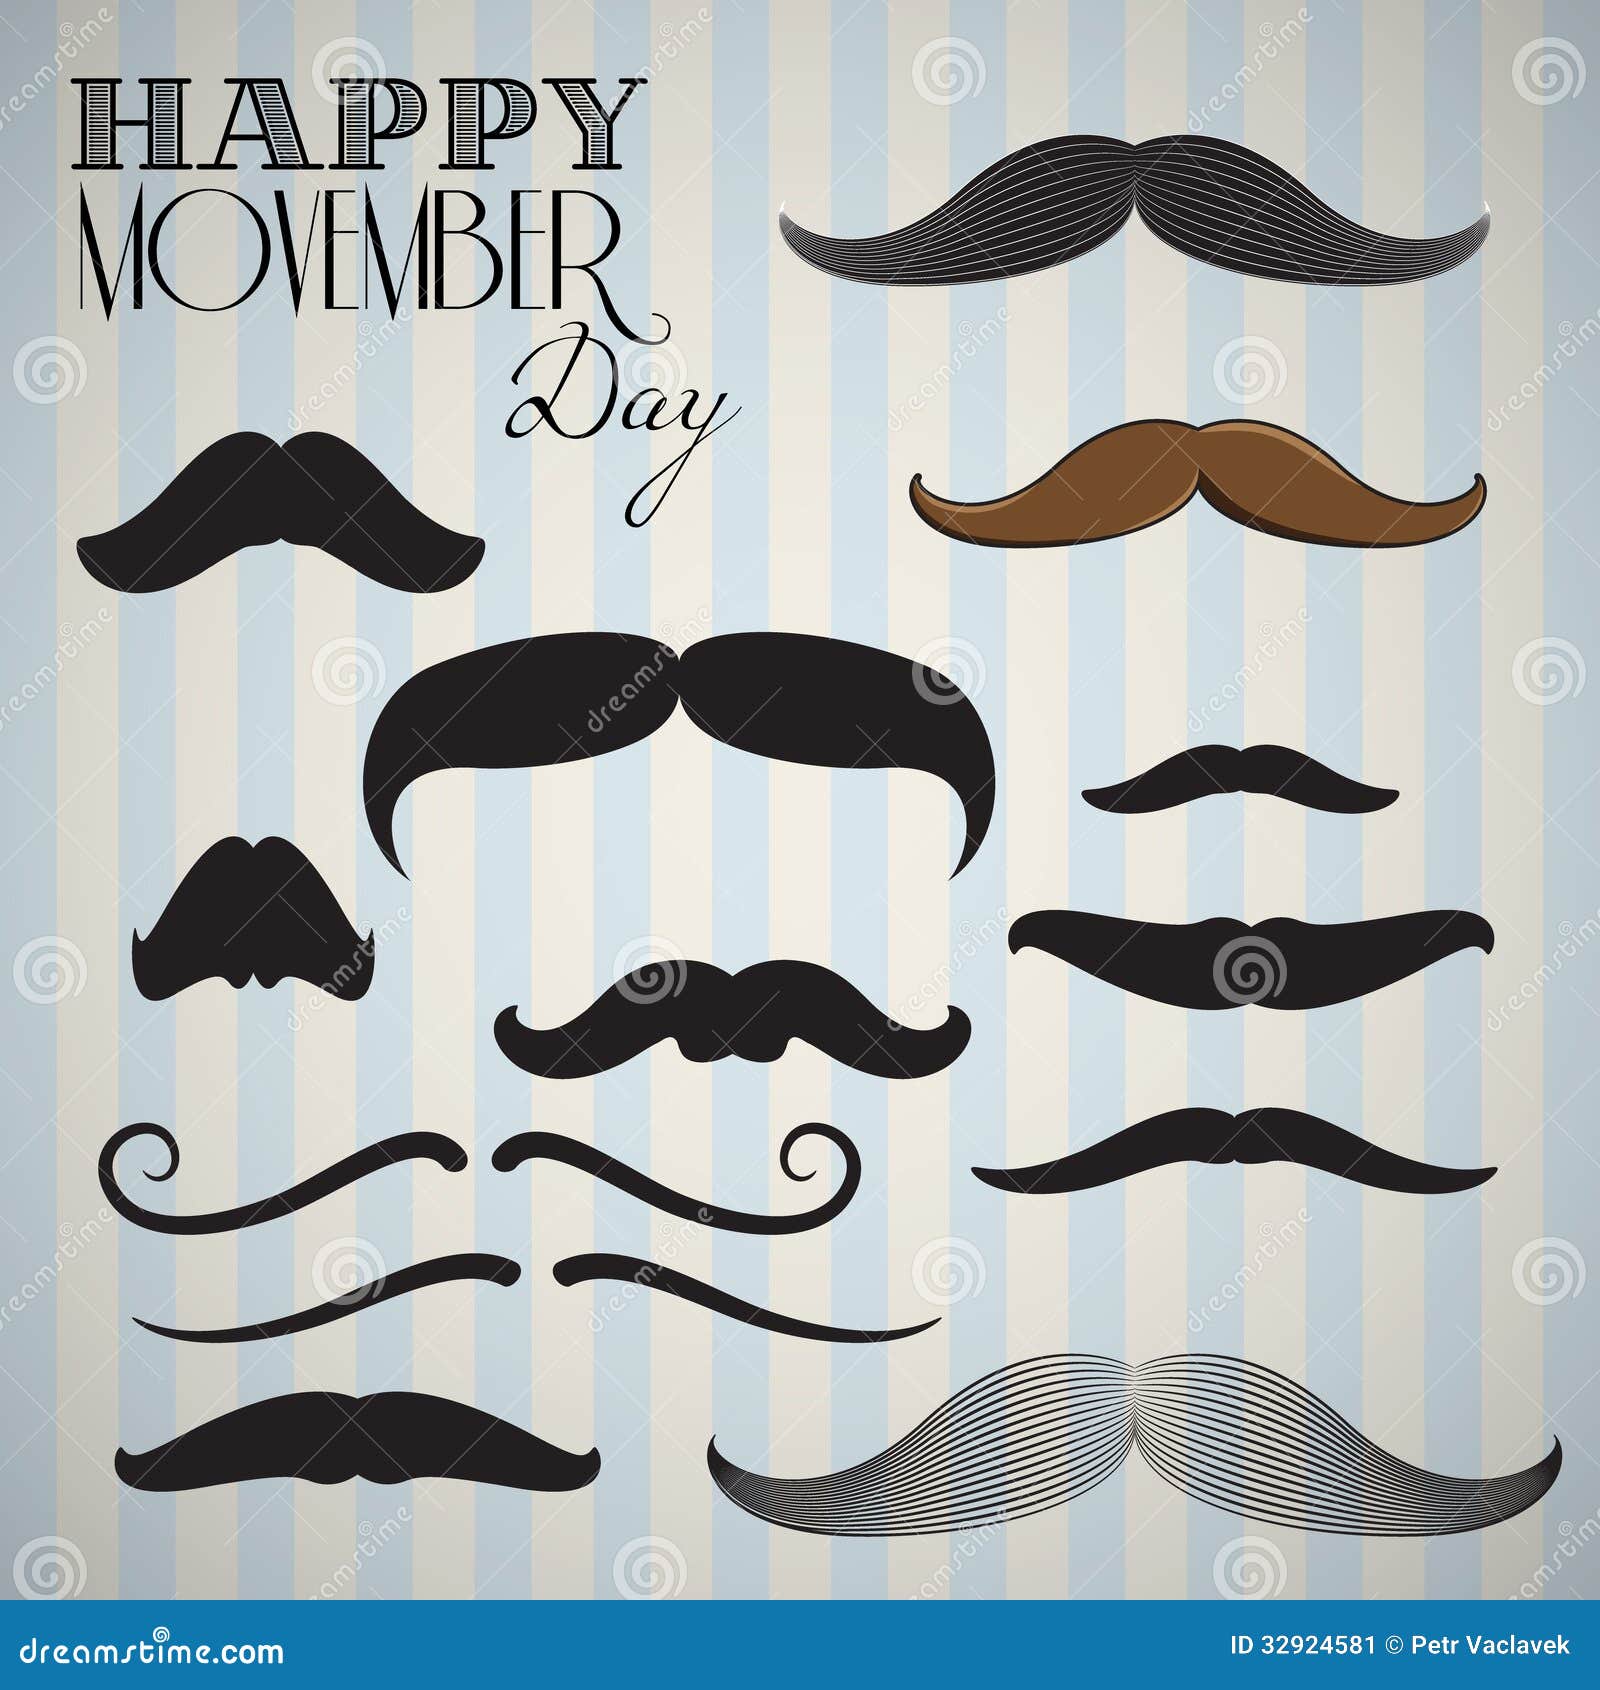 retro / vintage mustache set for happy movember day